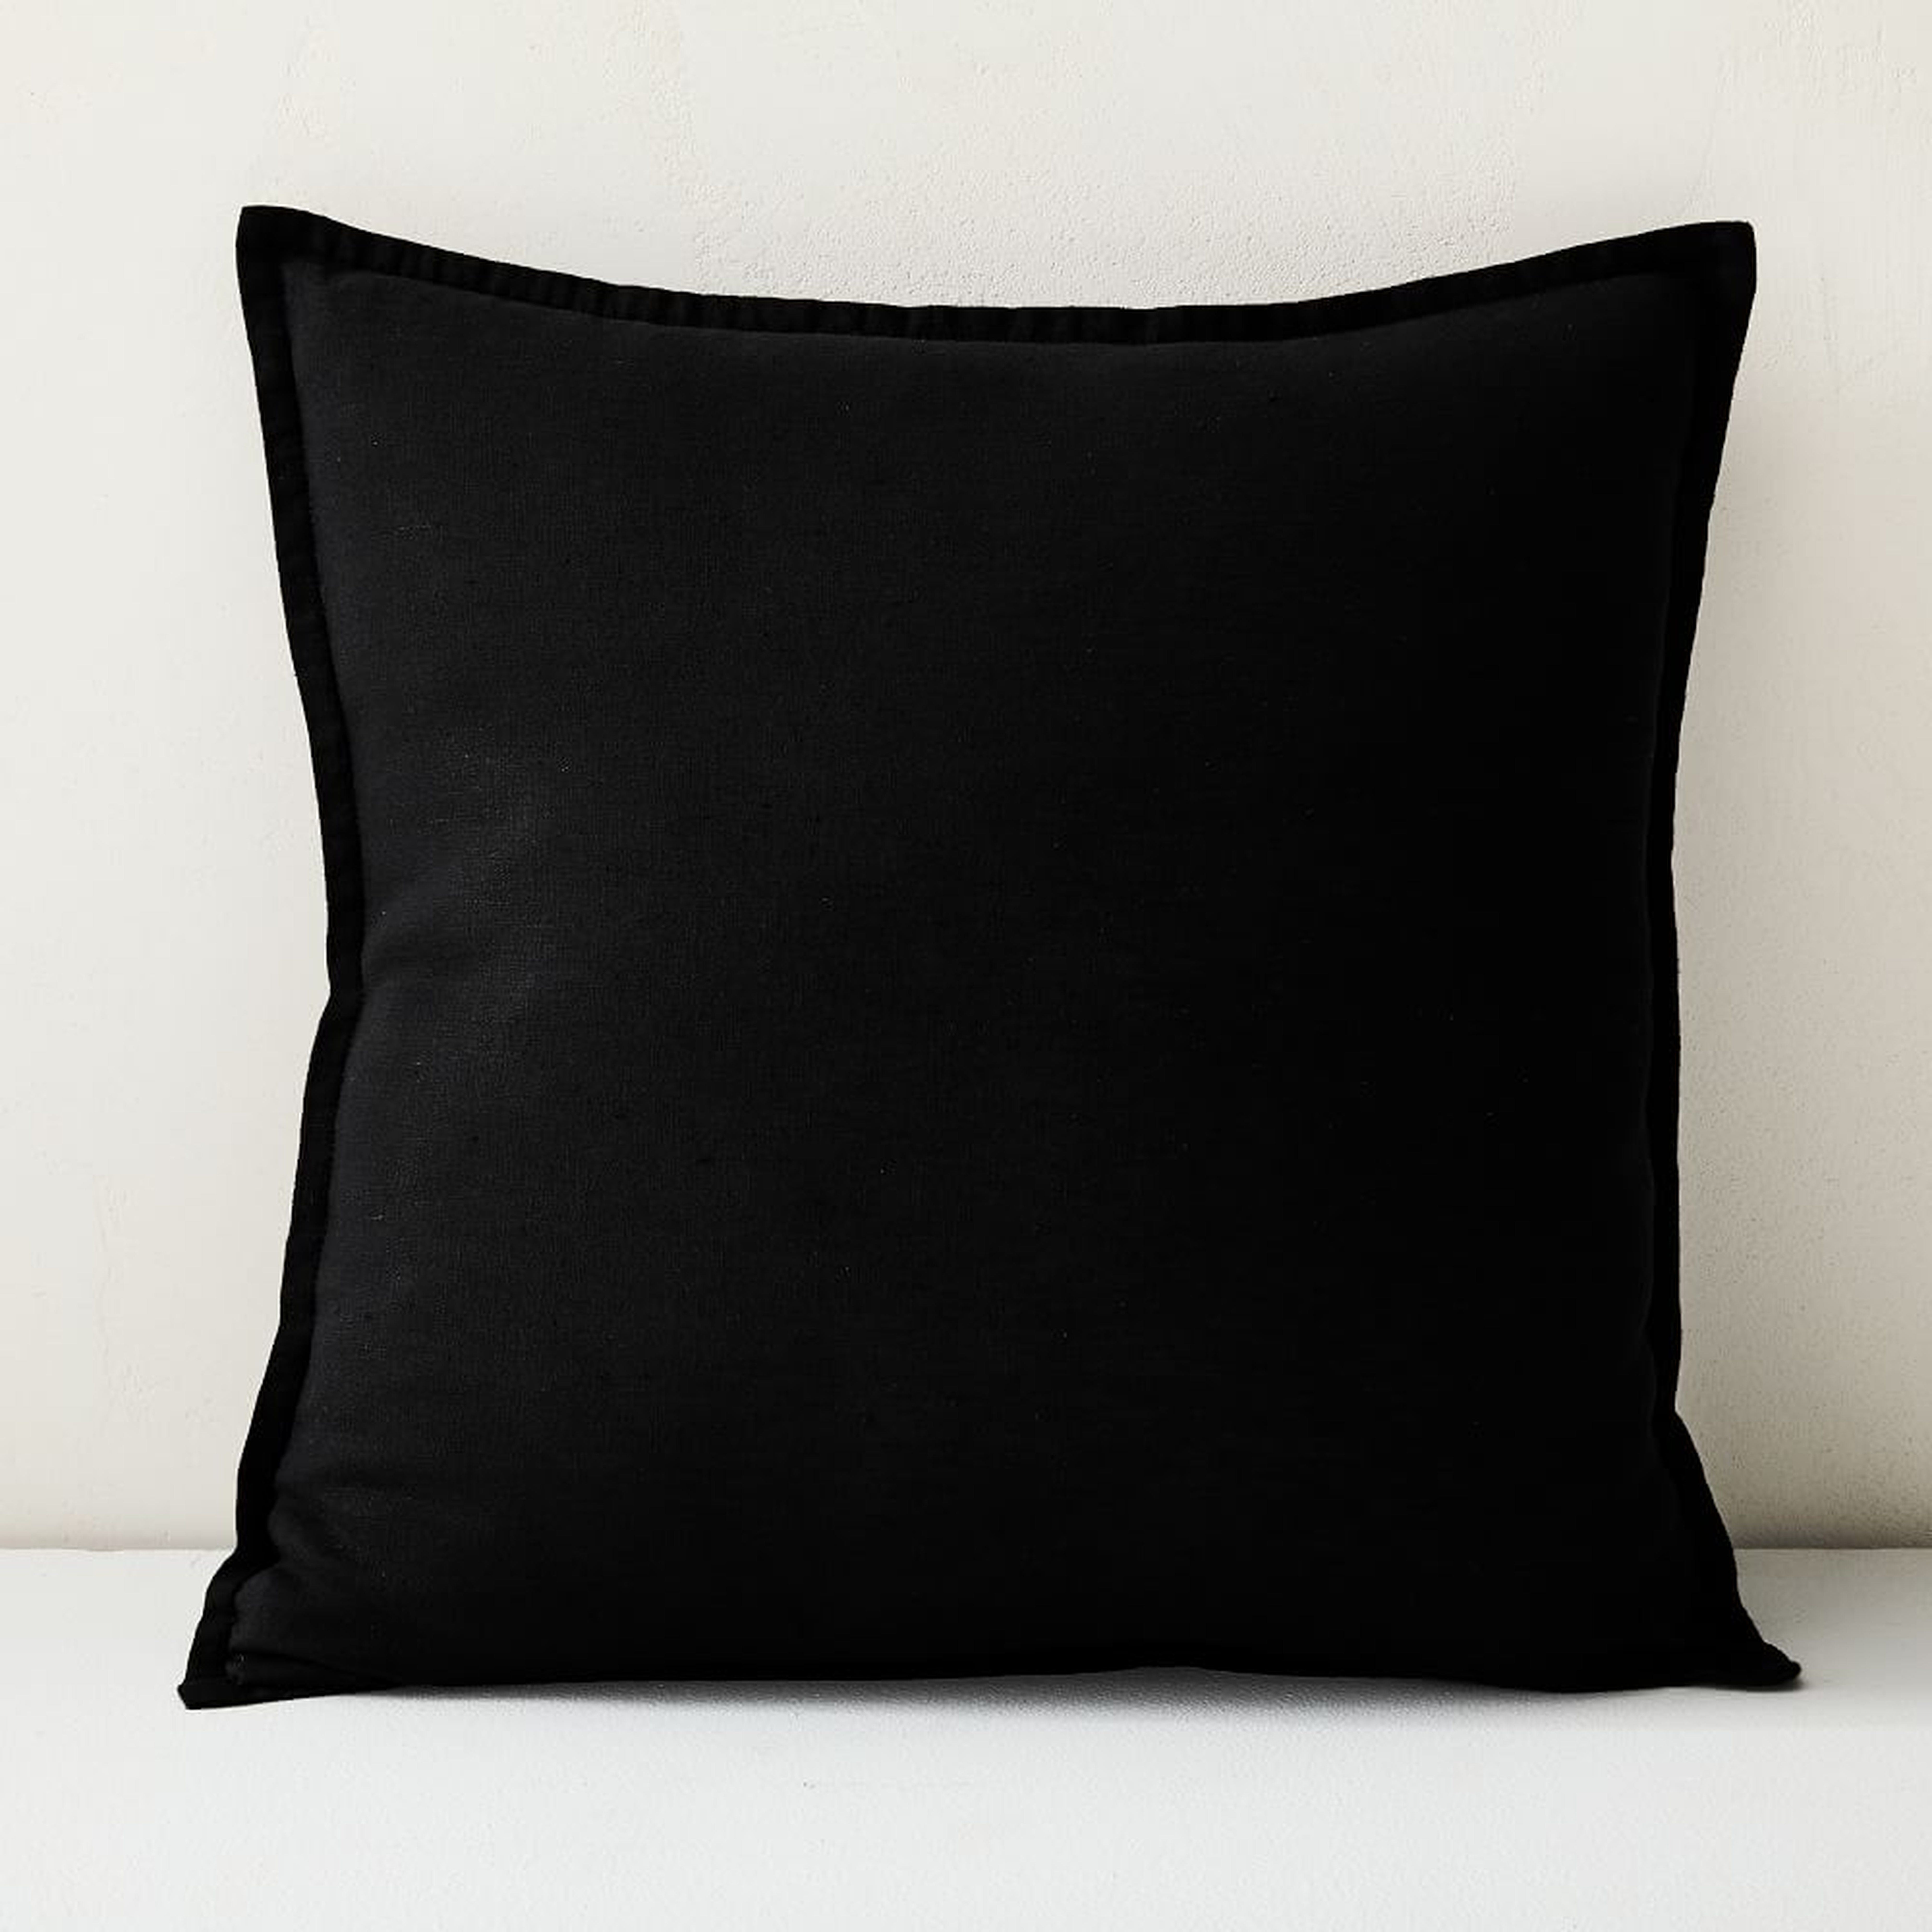 European Flax Linen Pillow Cover, 18"x18", Black - West Elm